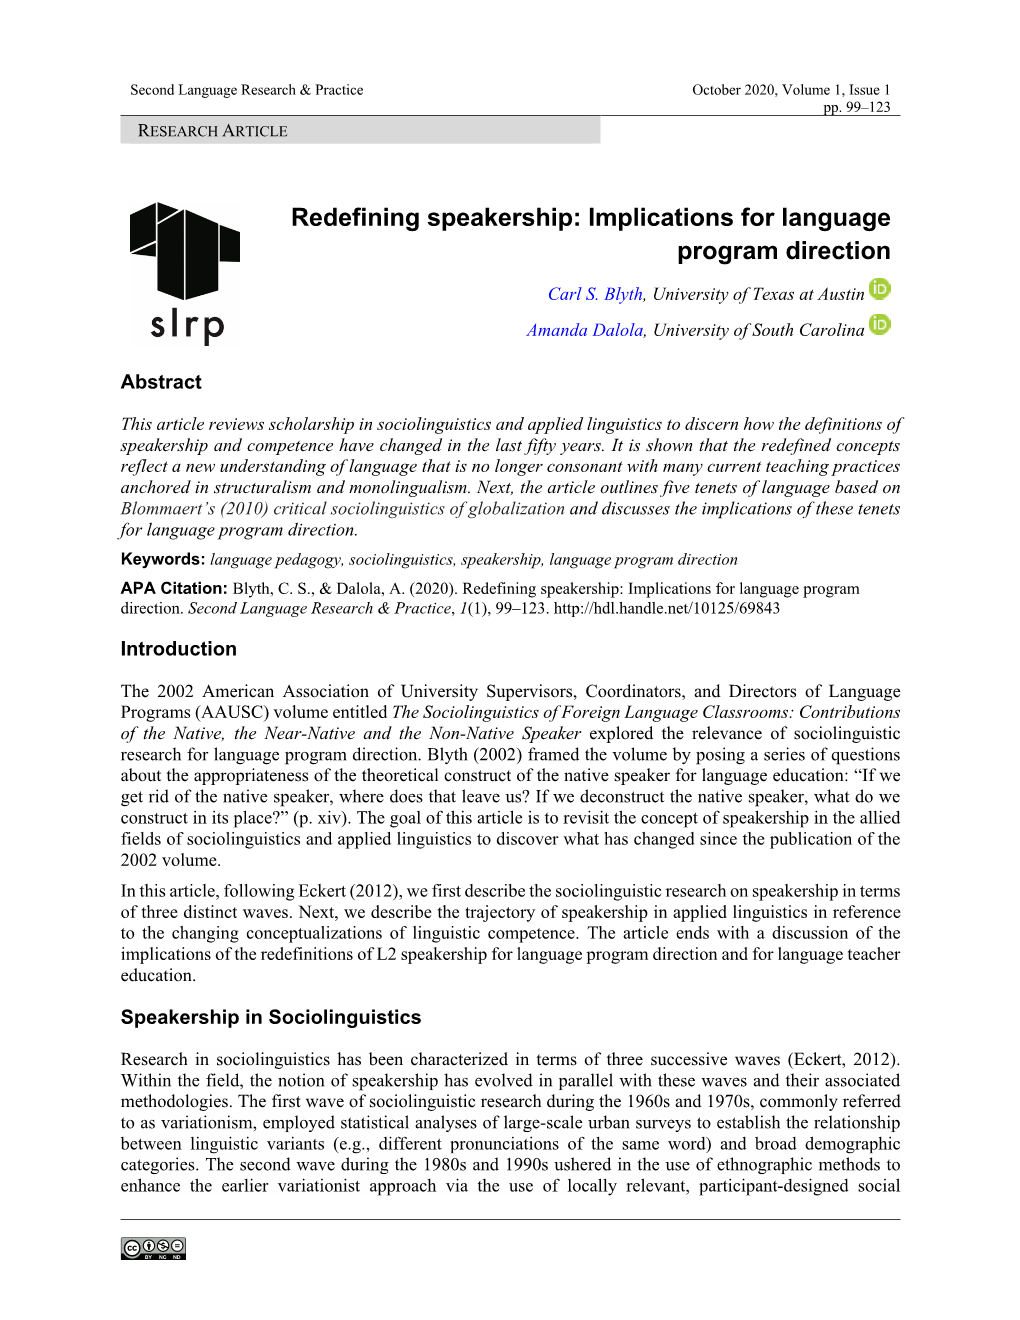 Redefining Speakership: Implications for Language Program Direction